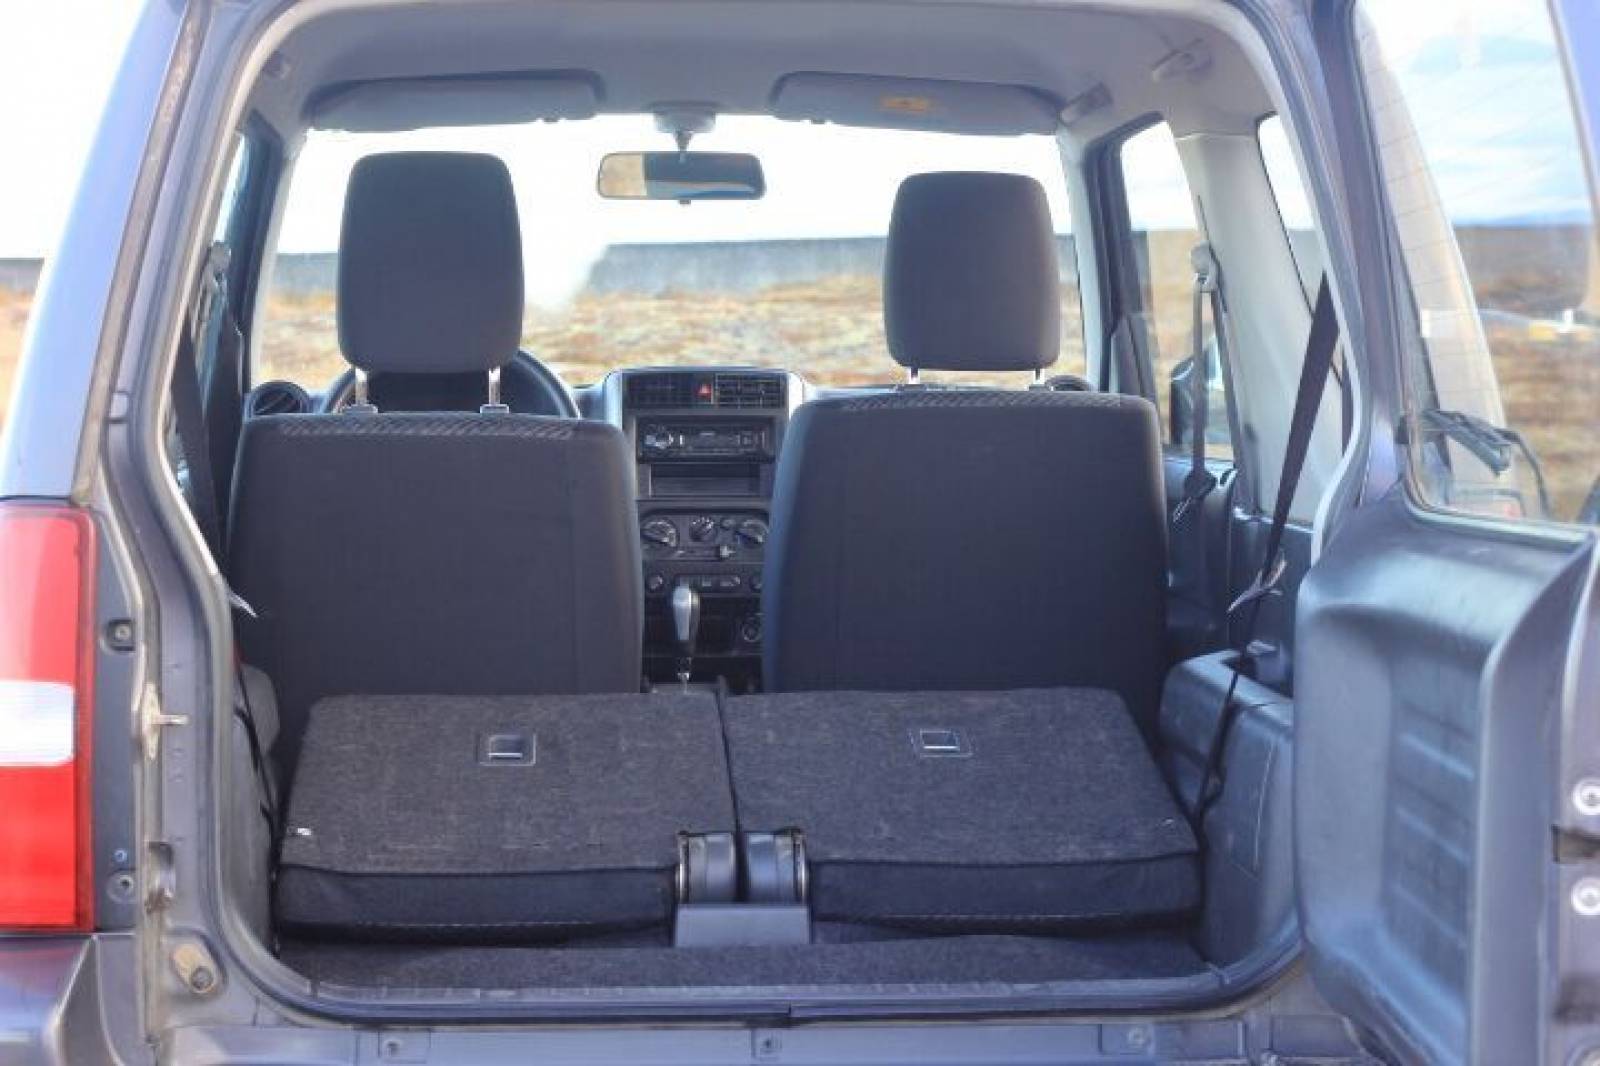 Suzuki Jimny with folded back seats